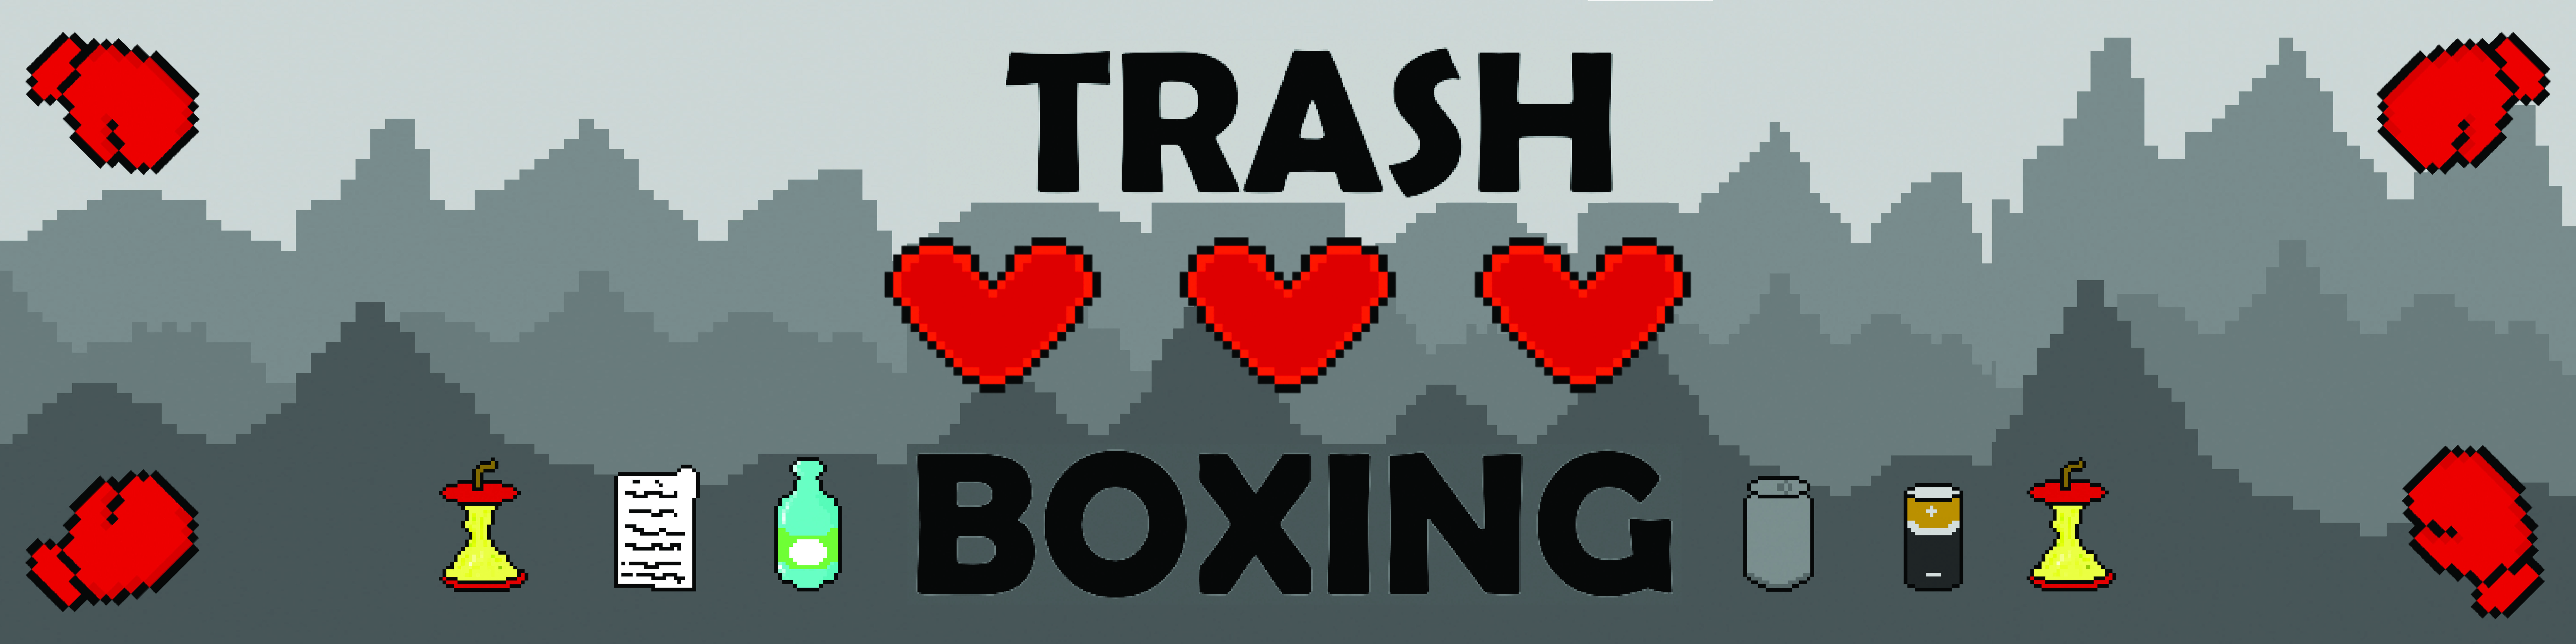 Trash Boxing Downloadable